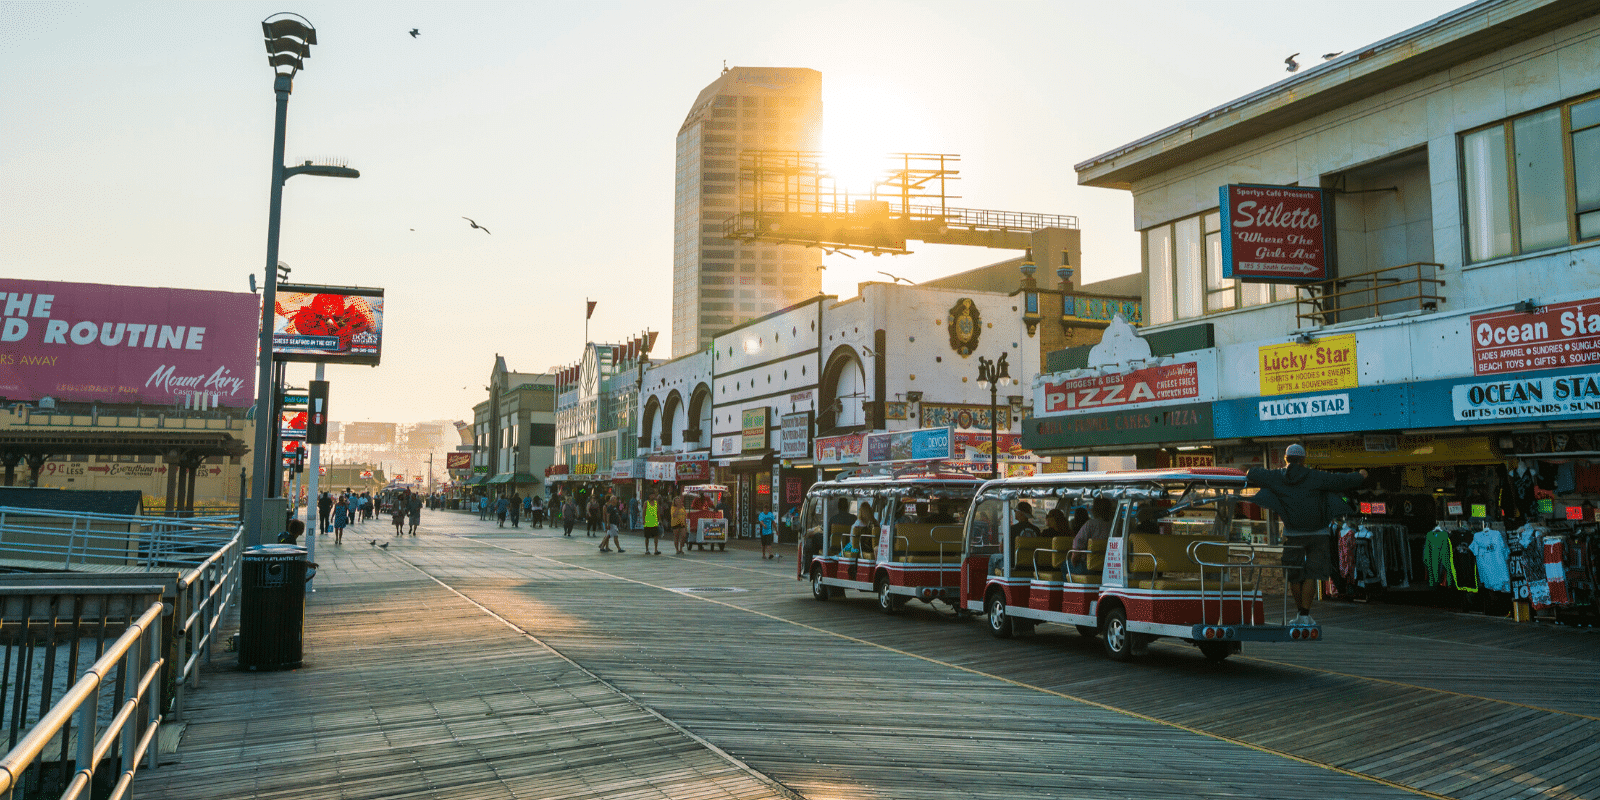 Header image showing the boardwalk in Atlantic City